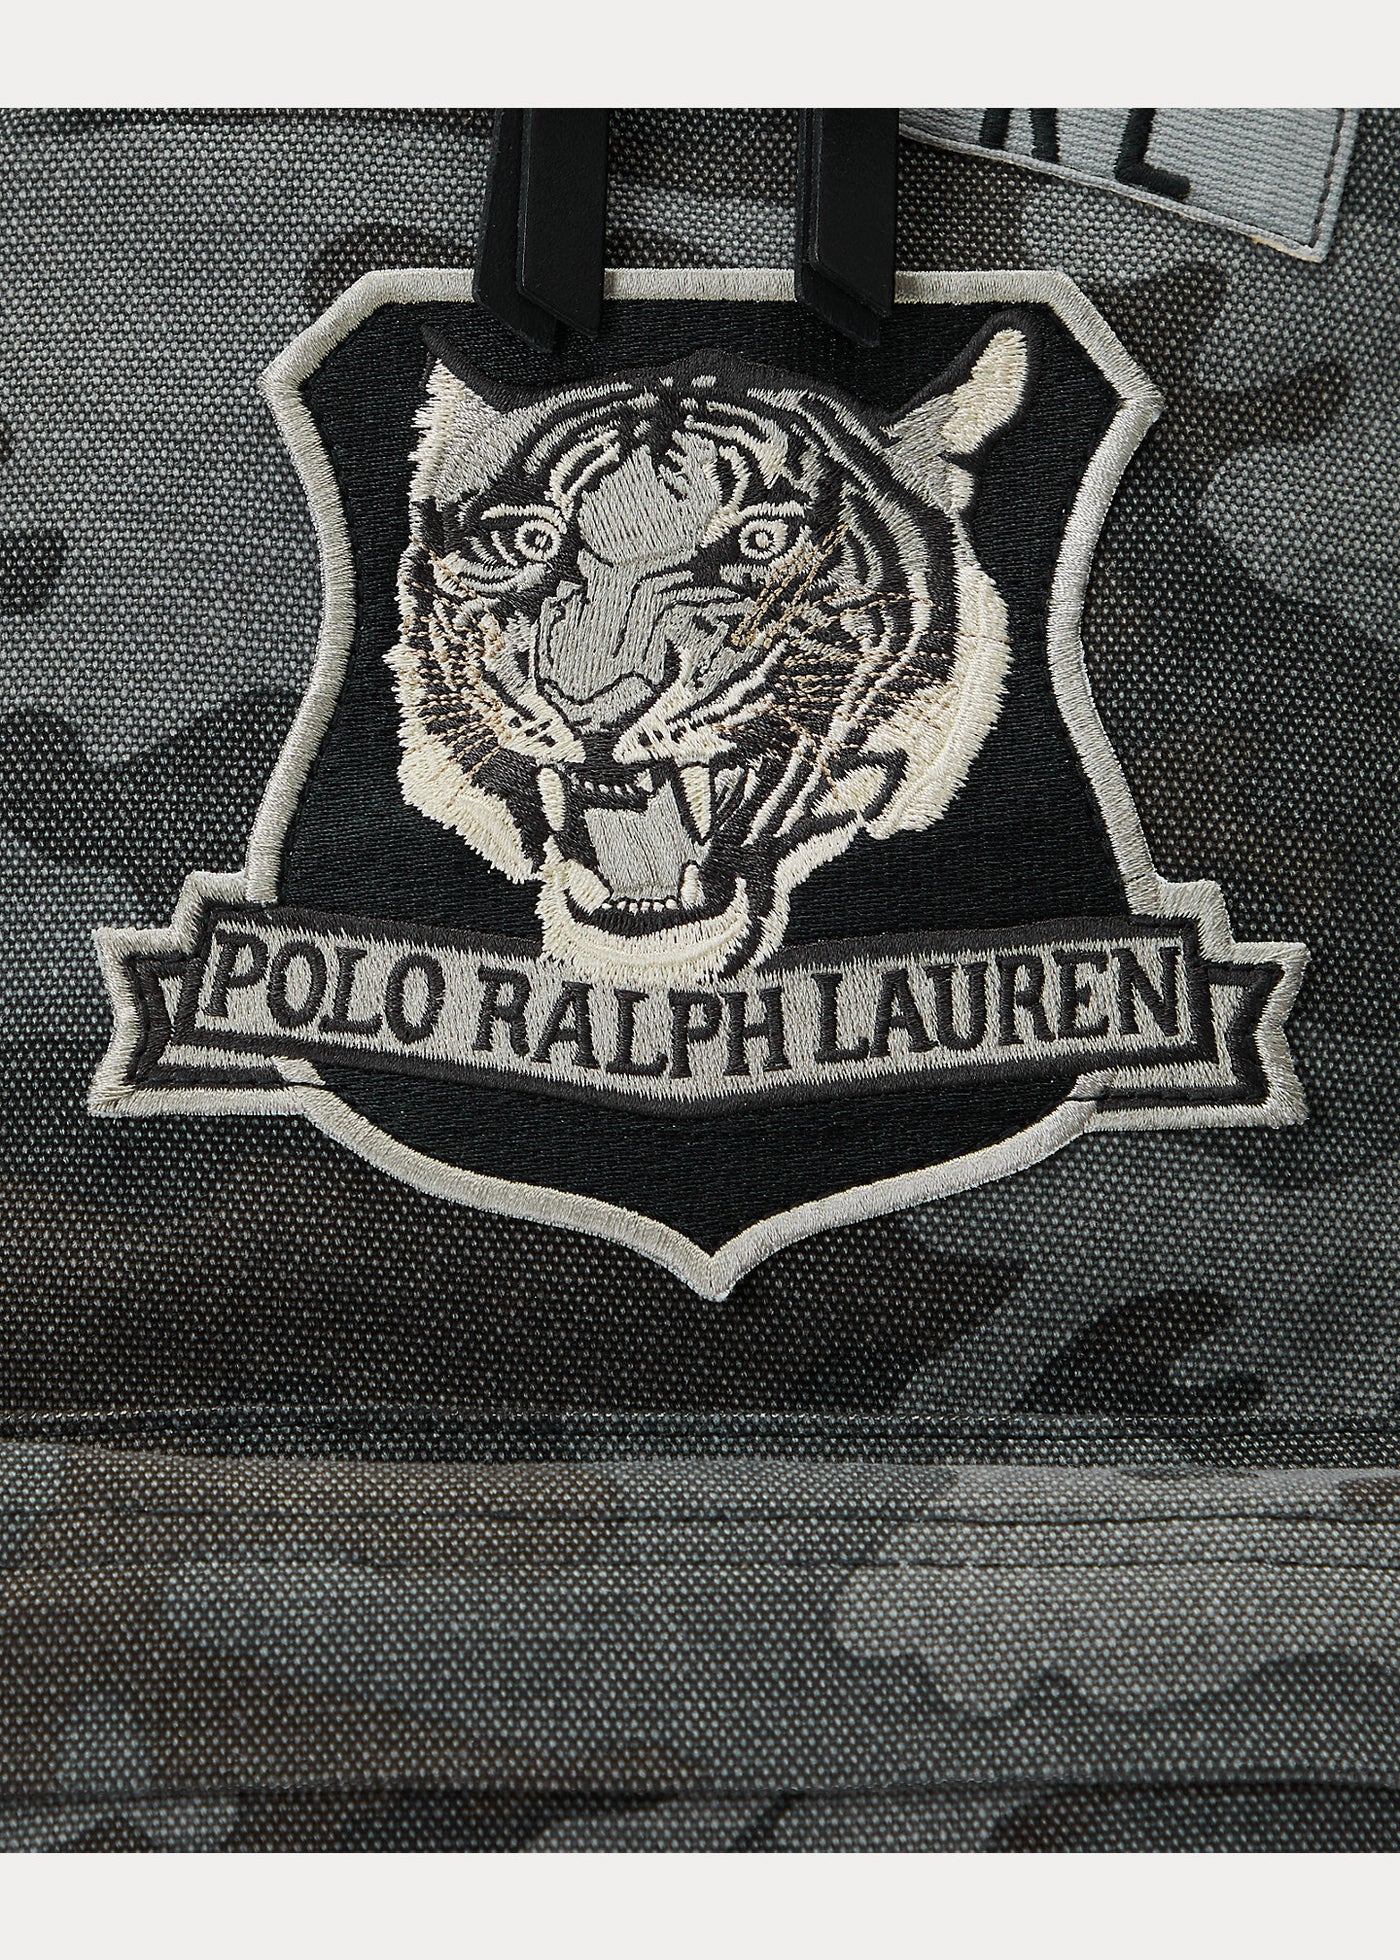 Ralph Lauren Canvas Tiger Camo Backpack | Greyscale